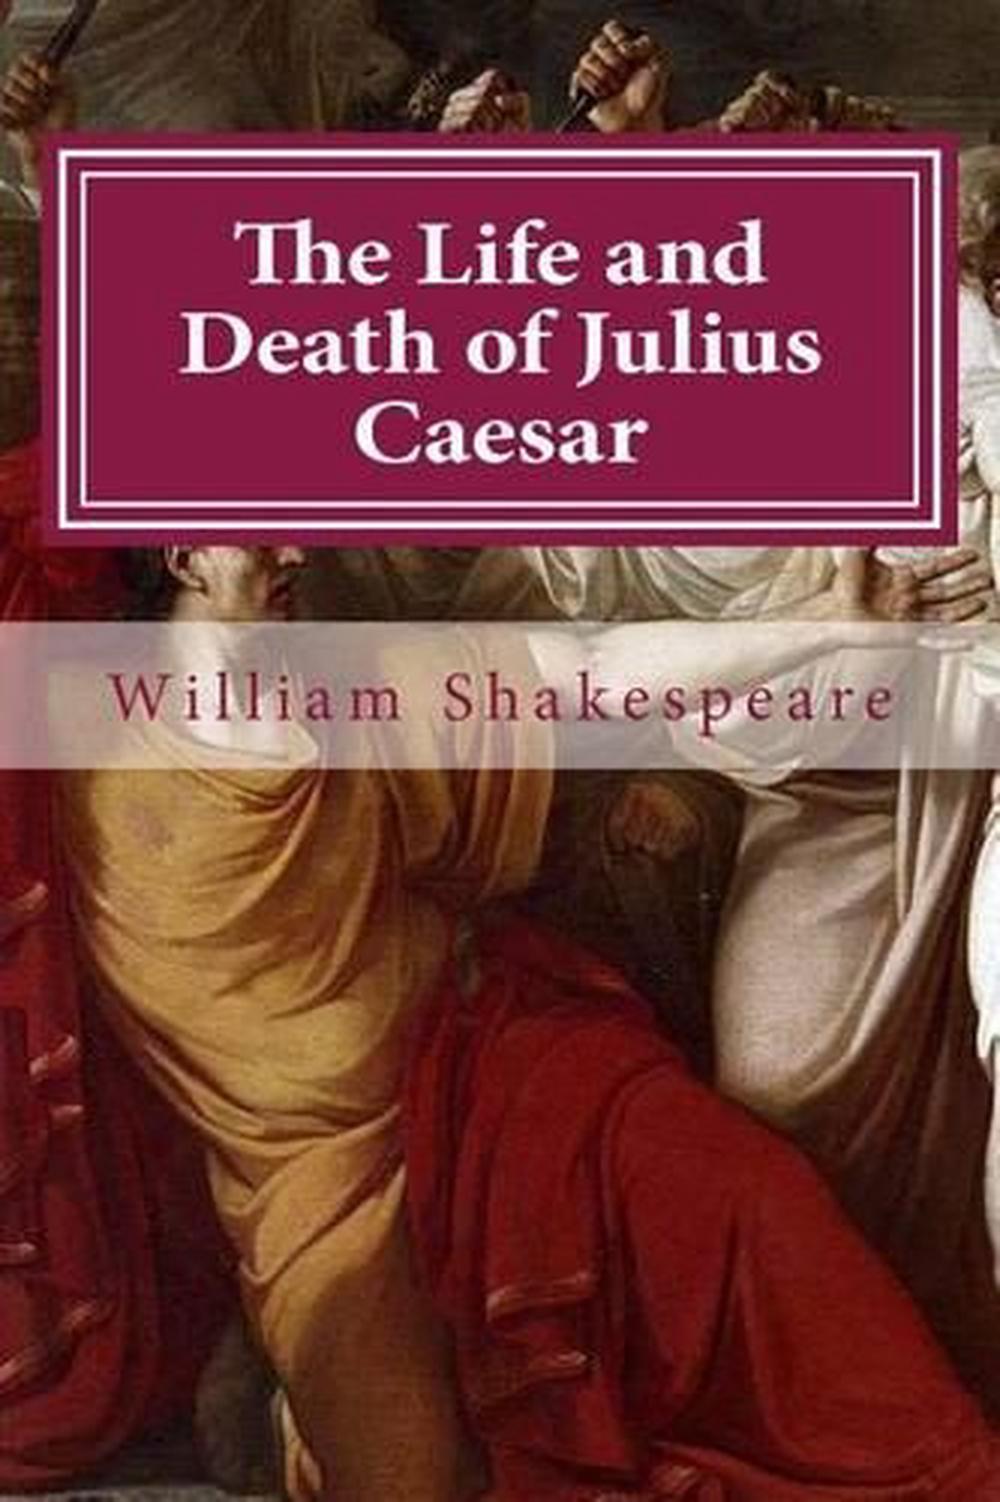 book review of julius caesar by william shakespeare